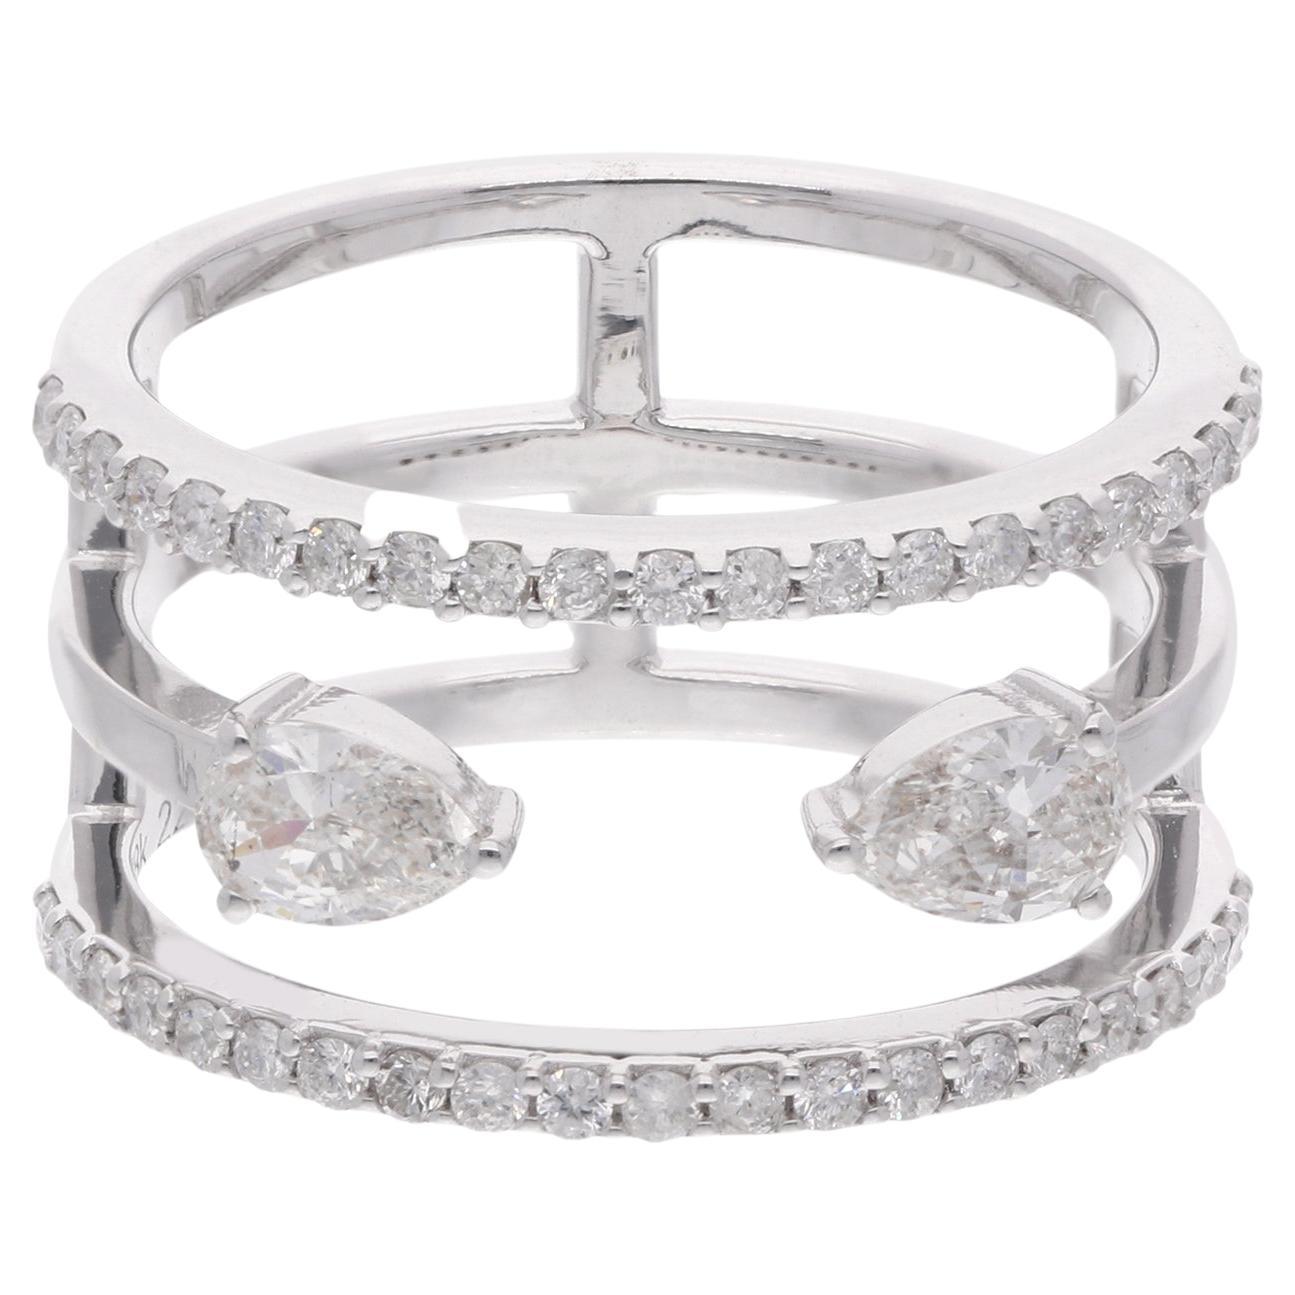 For Sale:  1 Ct Pear Round Diamond Three Band Ring 18 Karat White Gold Handmade Jewelry